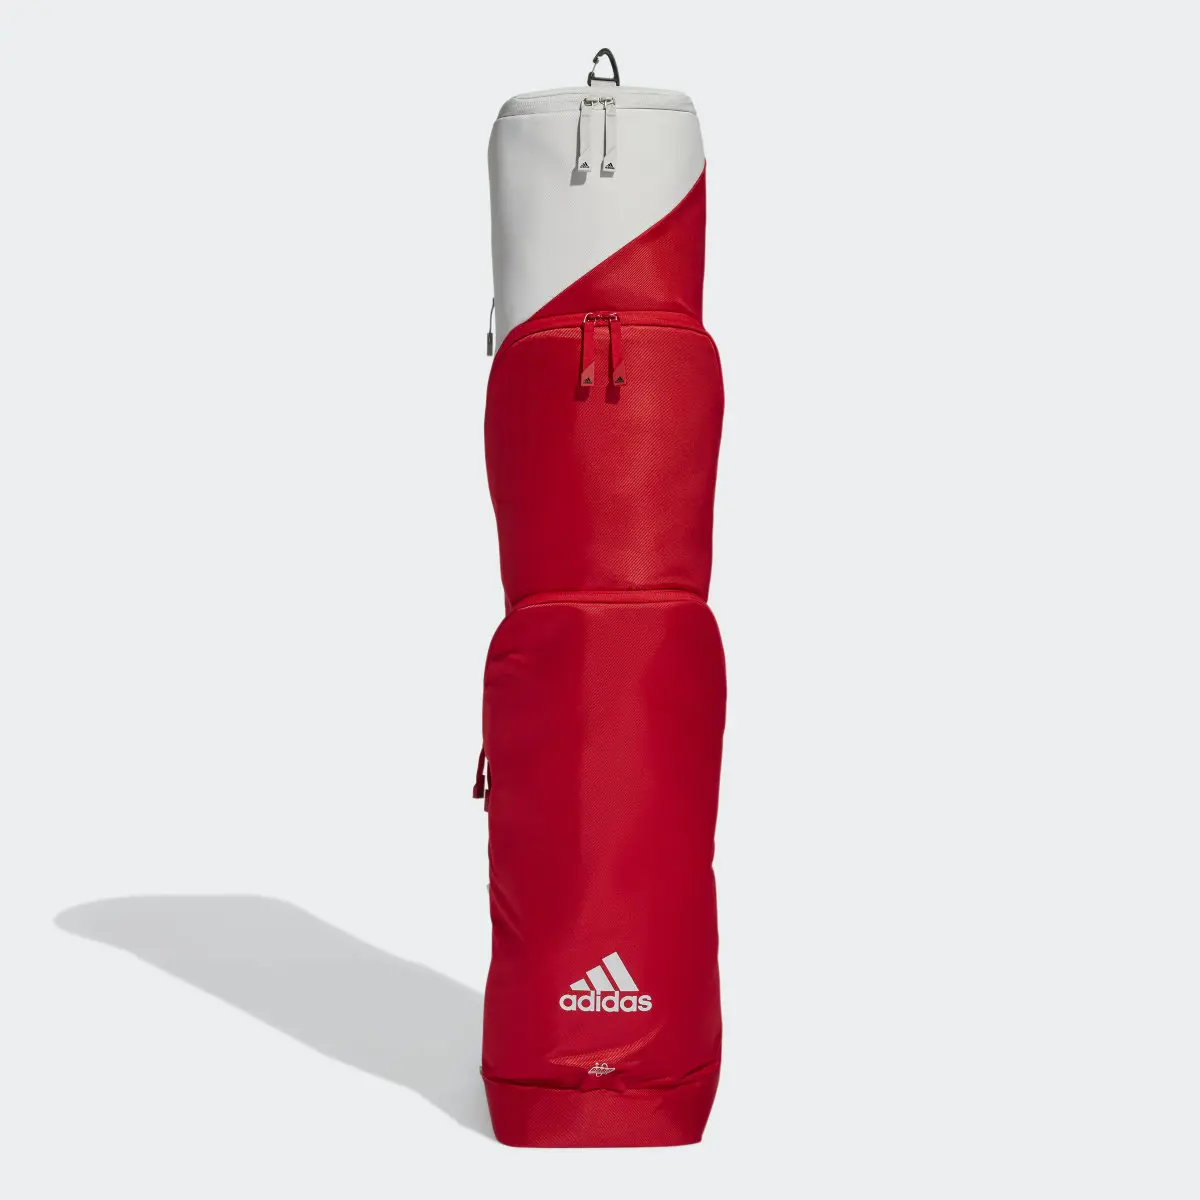 Adidas VS.6 Red/Grey Hockey Stick Bag. 1